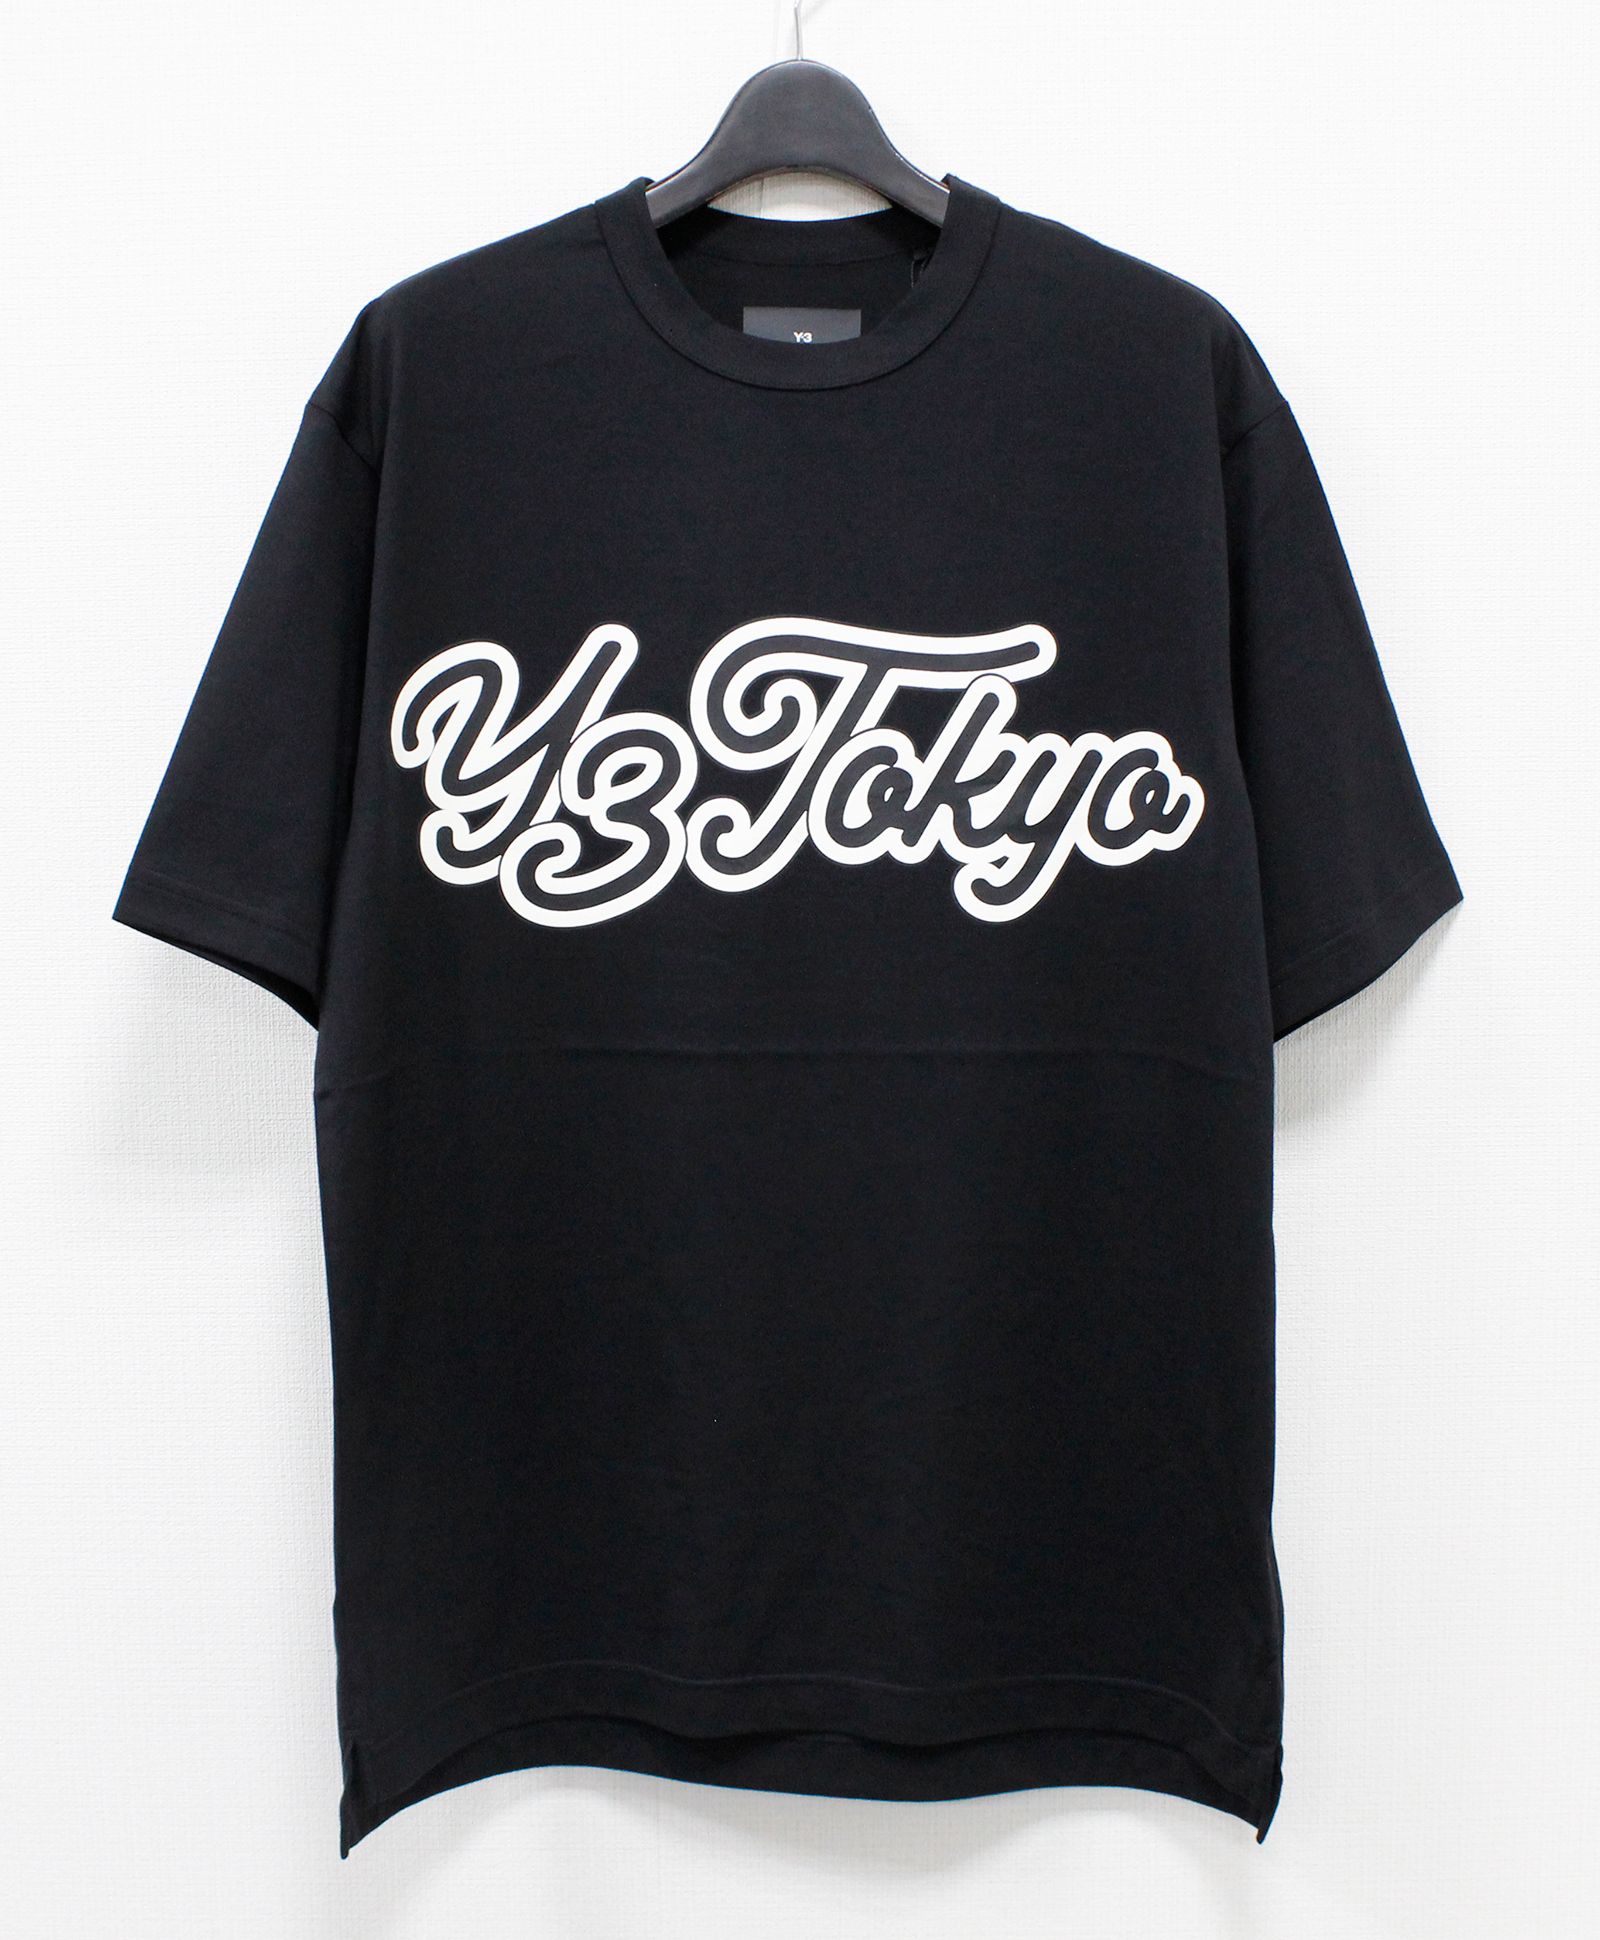 Y-3 - グラフィックTシャツ / Y-3 YY SS TEE / BLACK [IQ2140-APPA23 